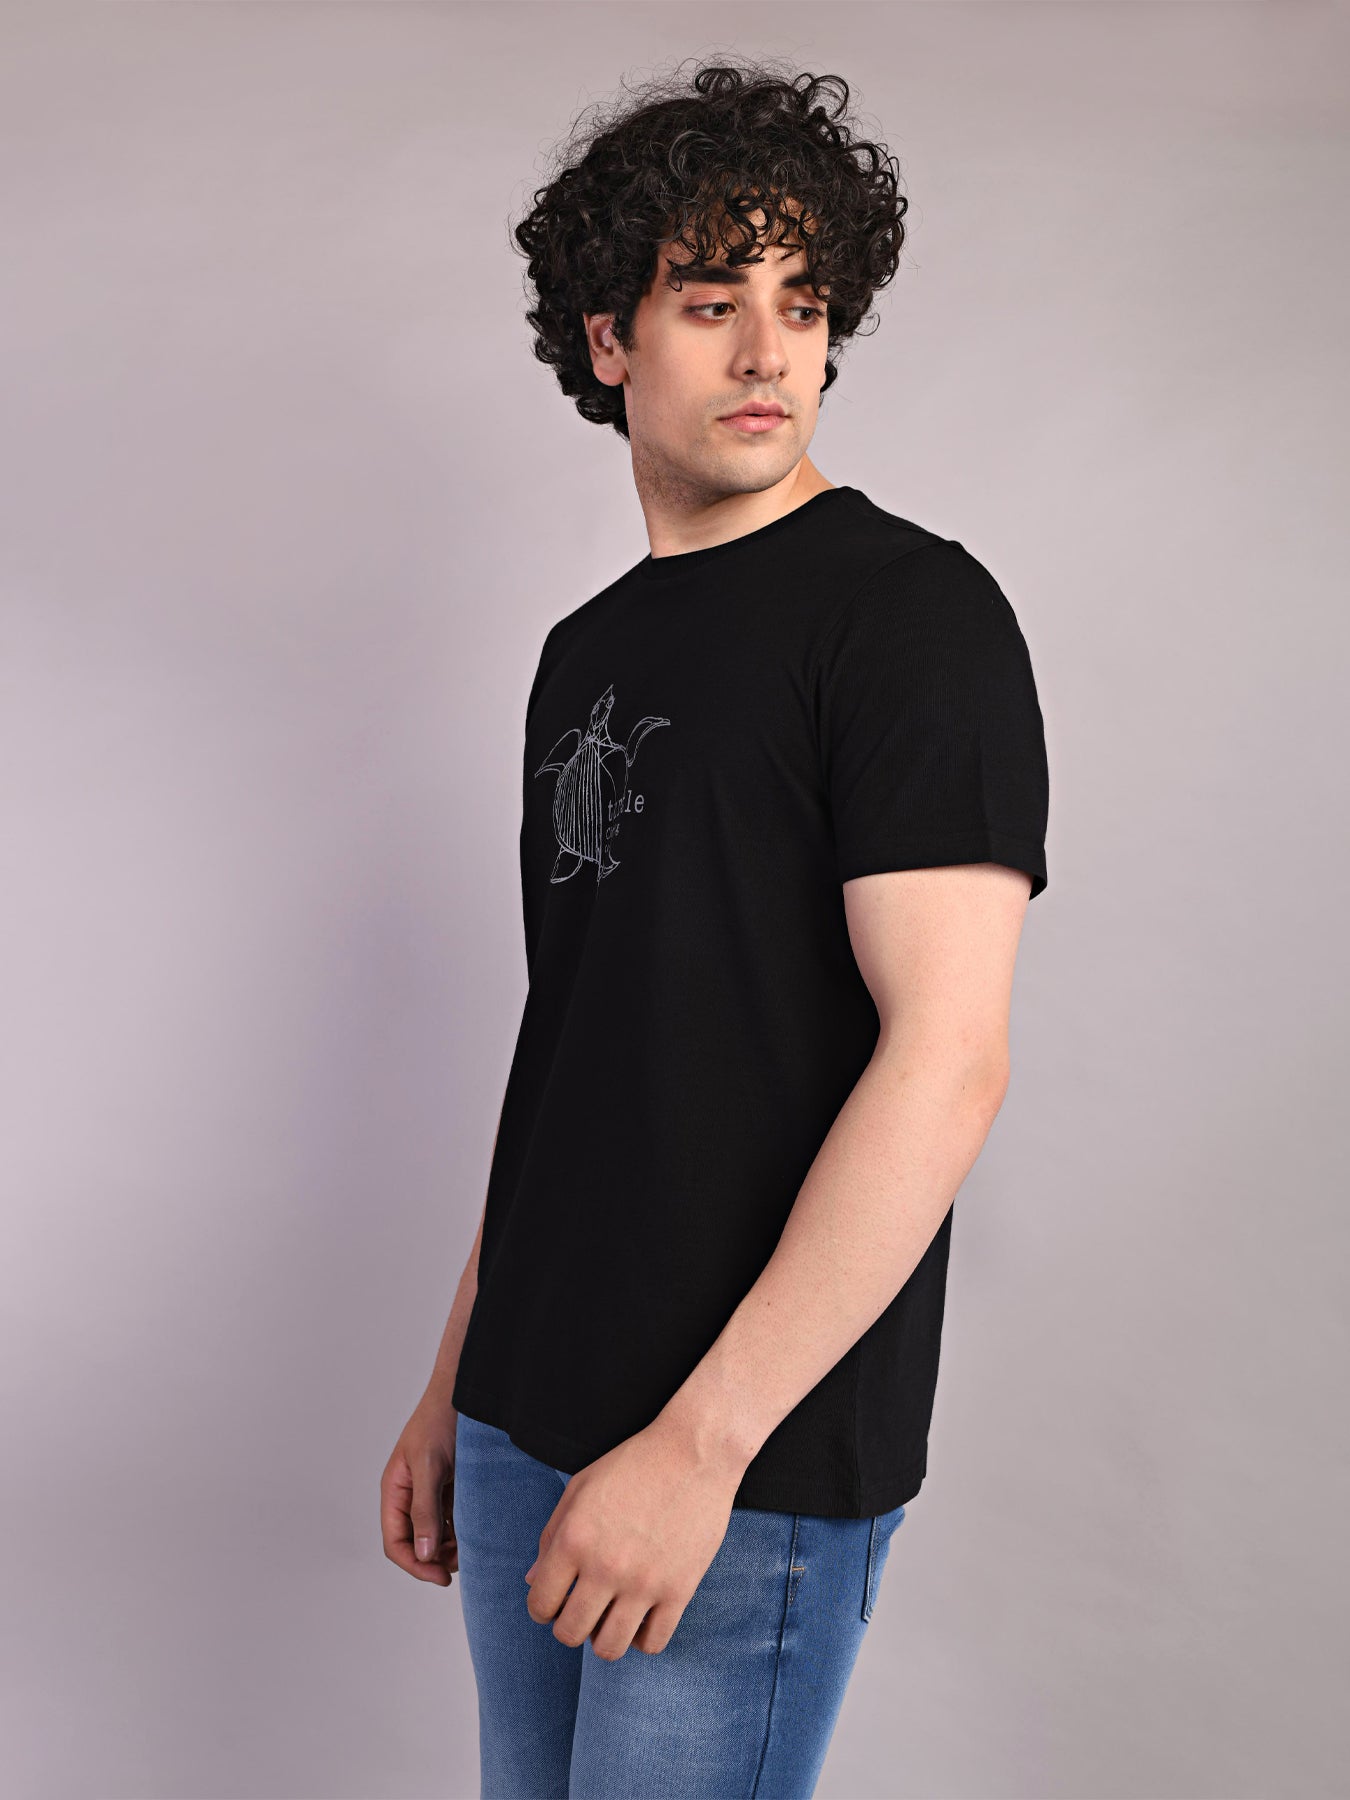 Cotton Stretch Black Printed Crew Neck Half Sleeve Casual T-Shirt